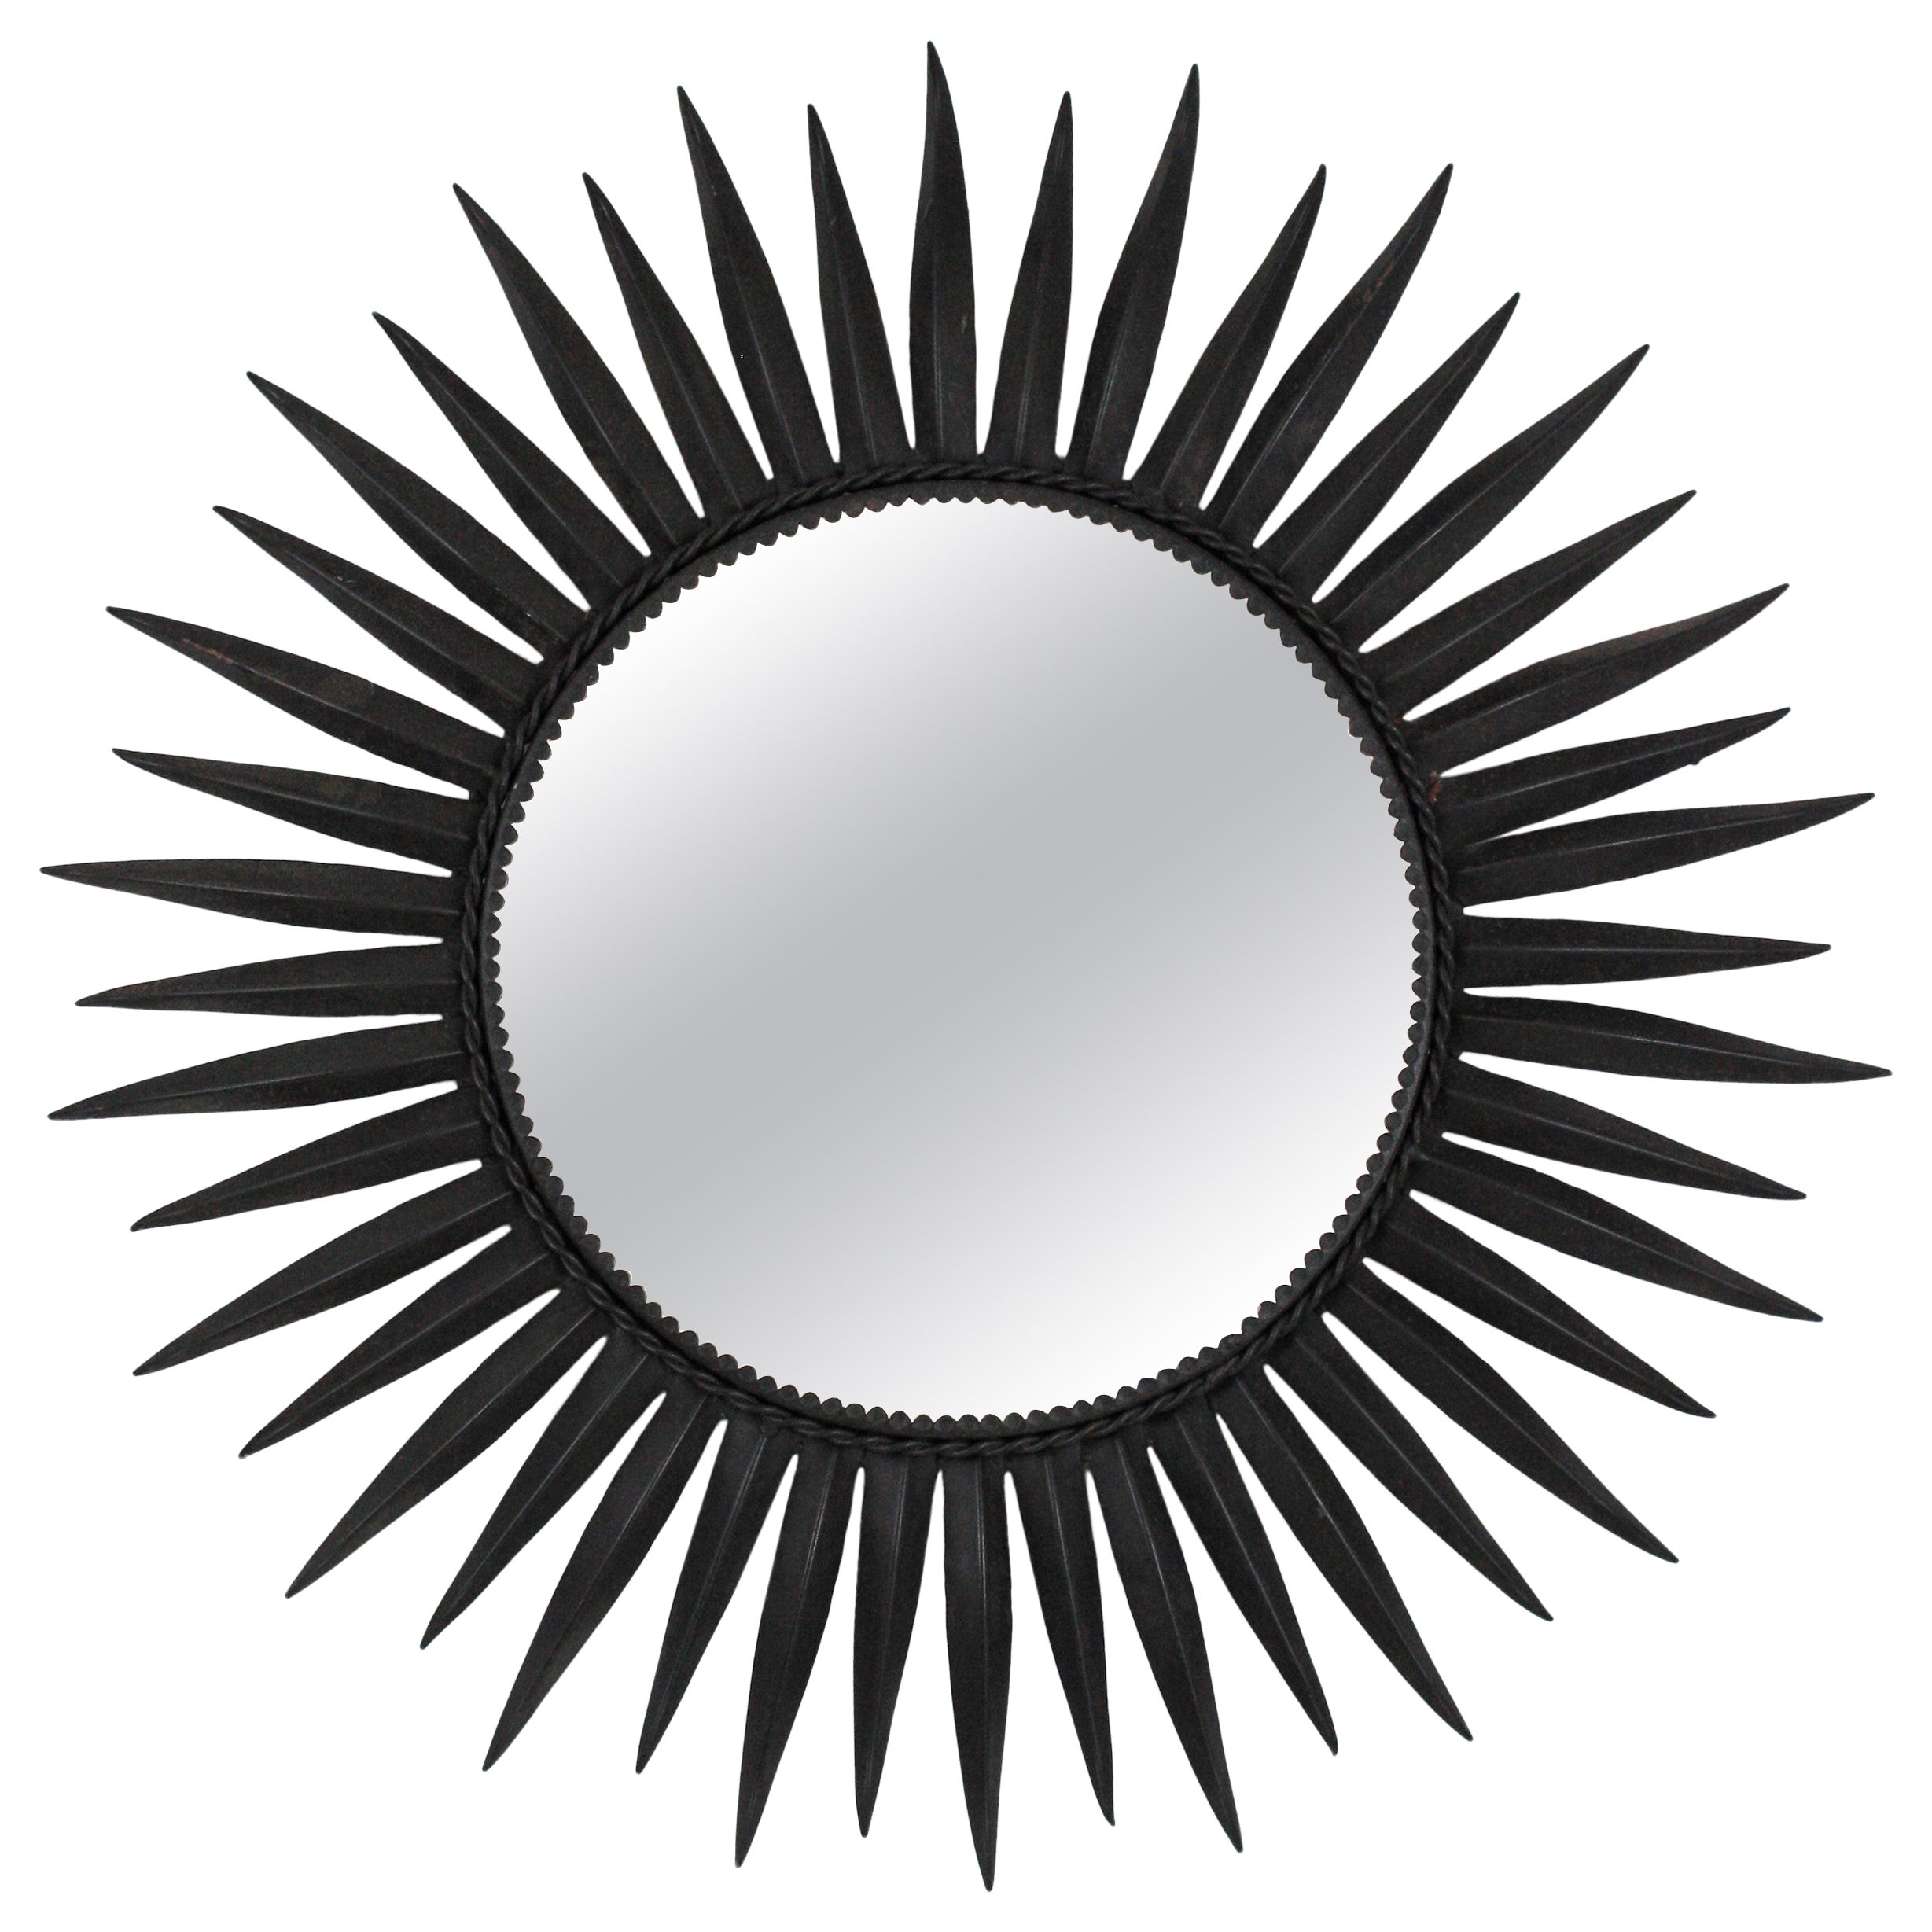 Sunburst Eyelash Mirror in Black Wrought Iron